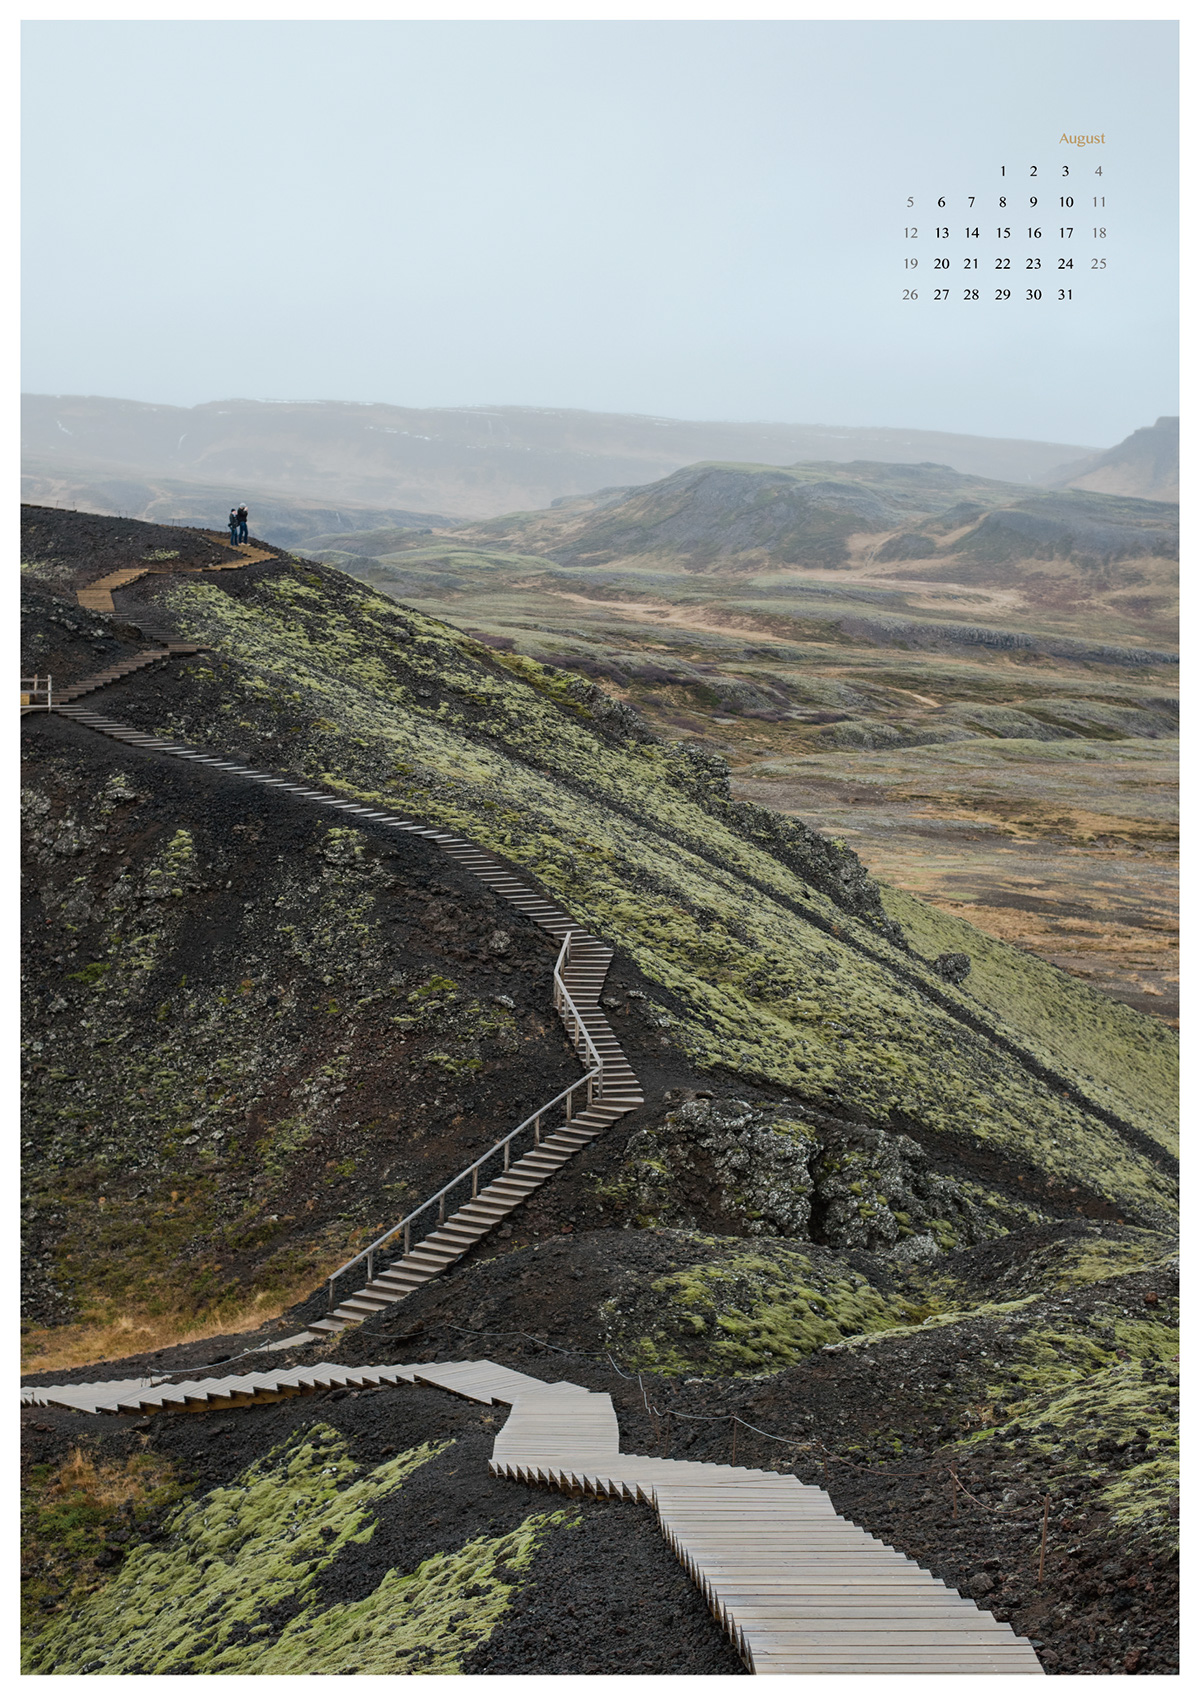 Landscape tour iceland poster calendar on the way RoadTrip